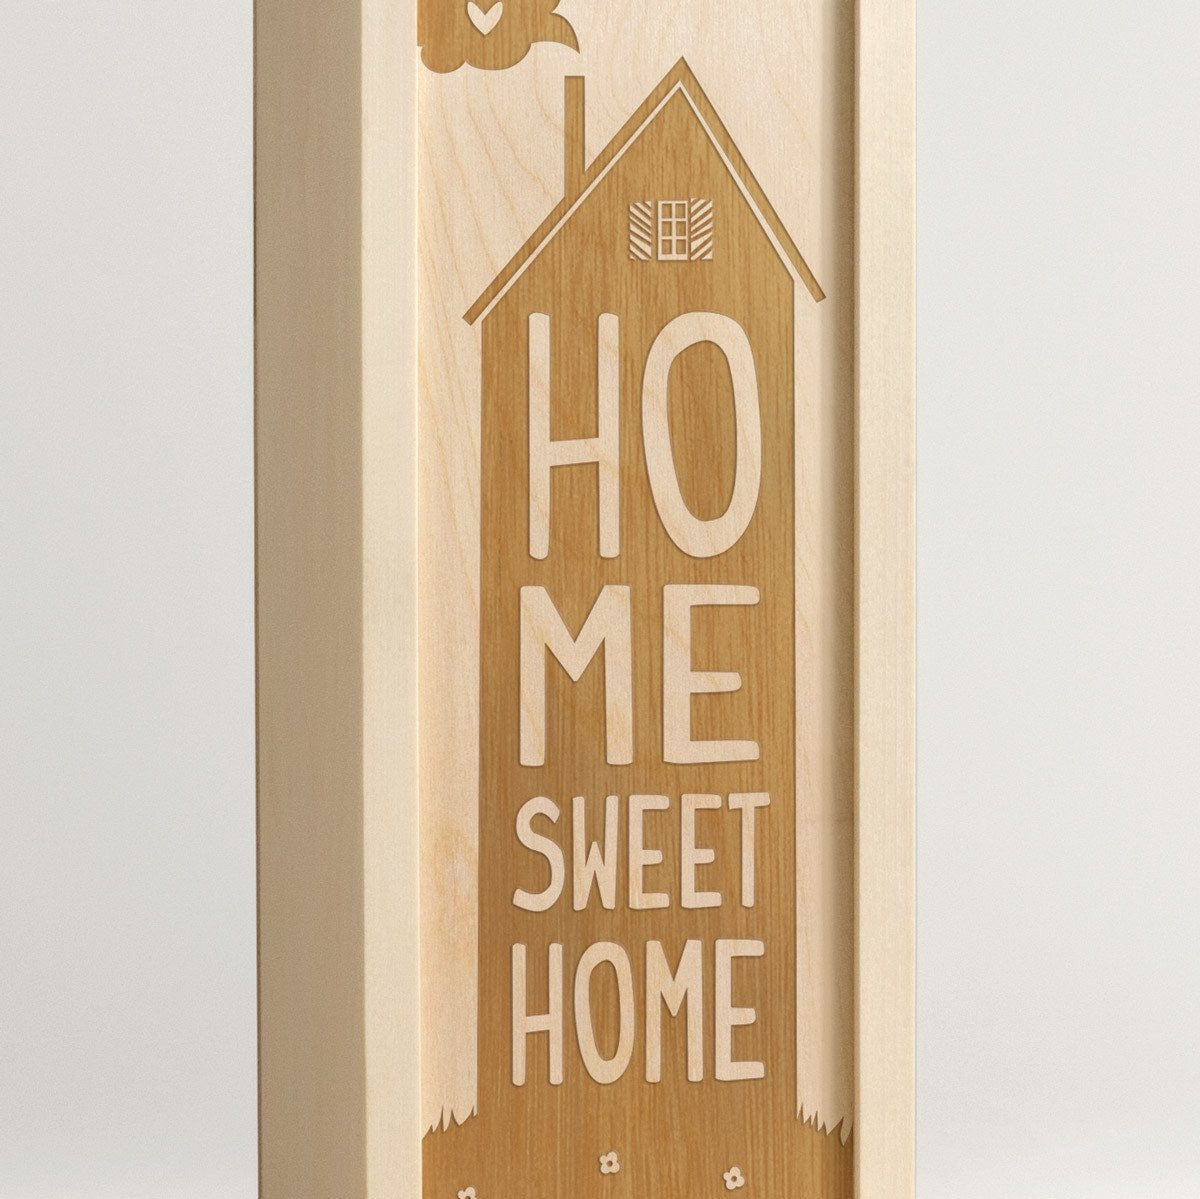 Home Sweet House - Wine Box - Detail Image